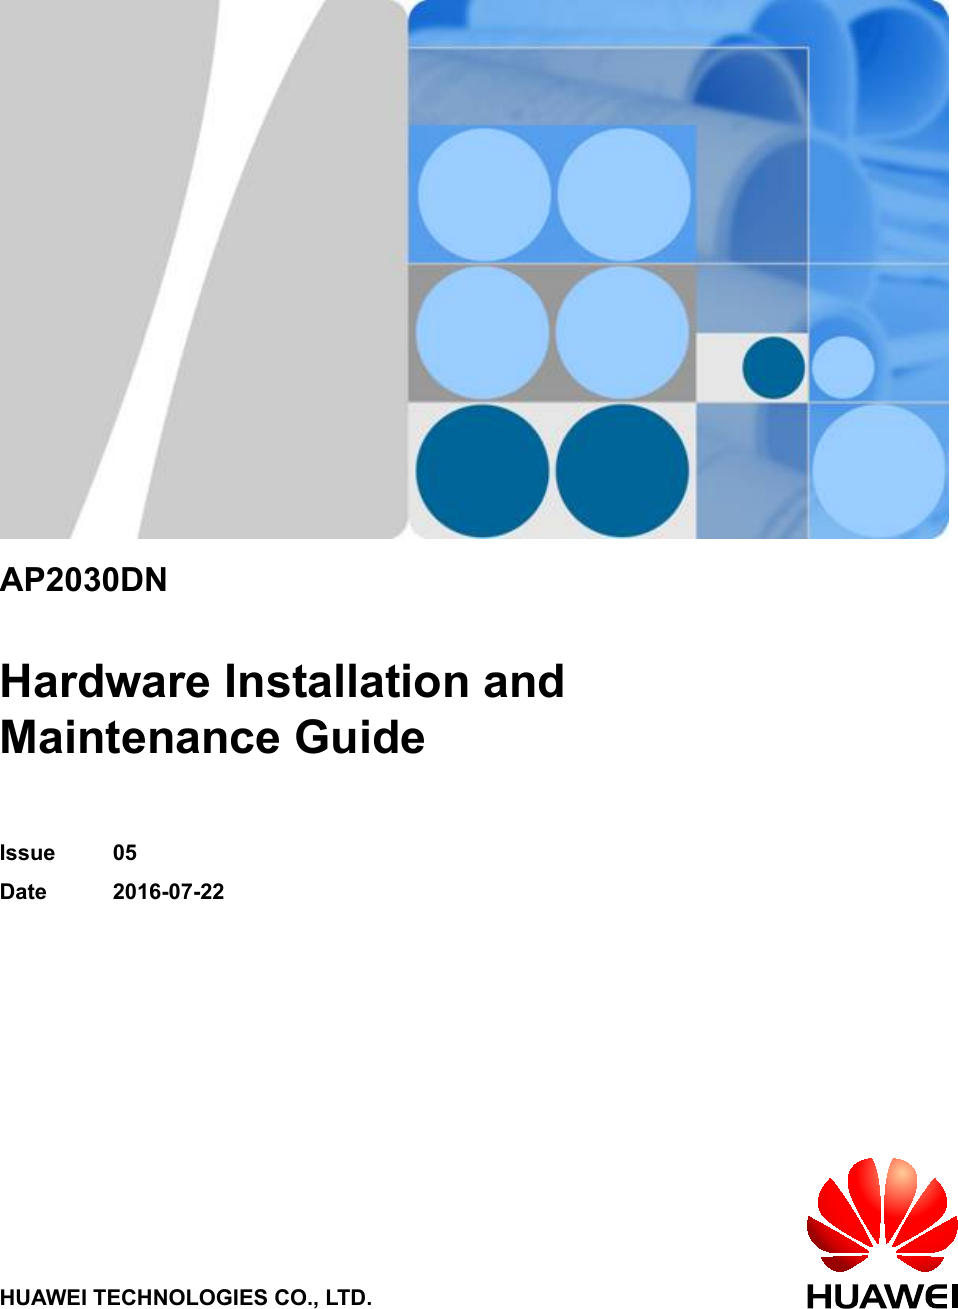 AP2030DNHardware Installation andMaintenance GuideIssue 05Date 2016-07-22HUAWEI TECHNOLOGIES CO., LTD.